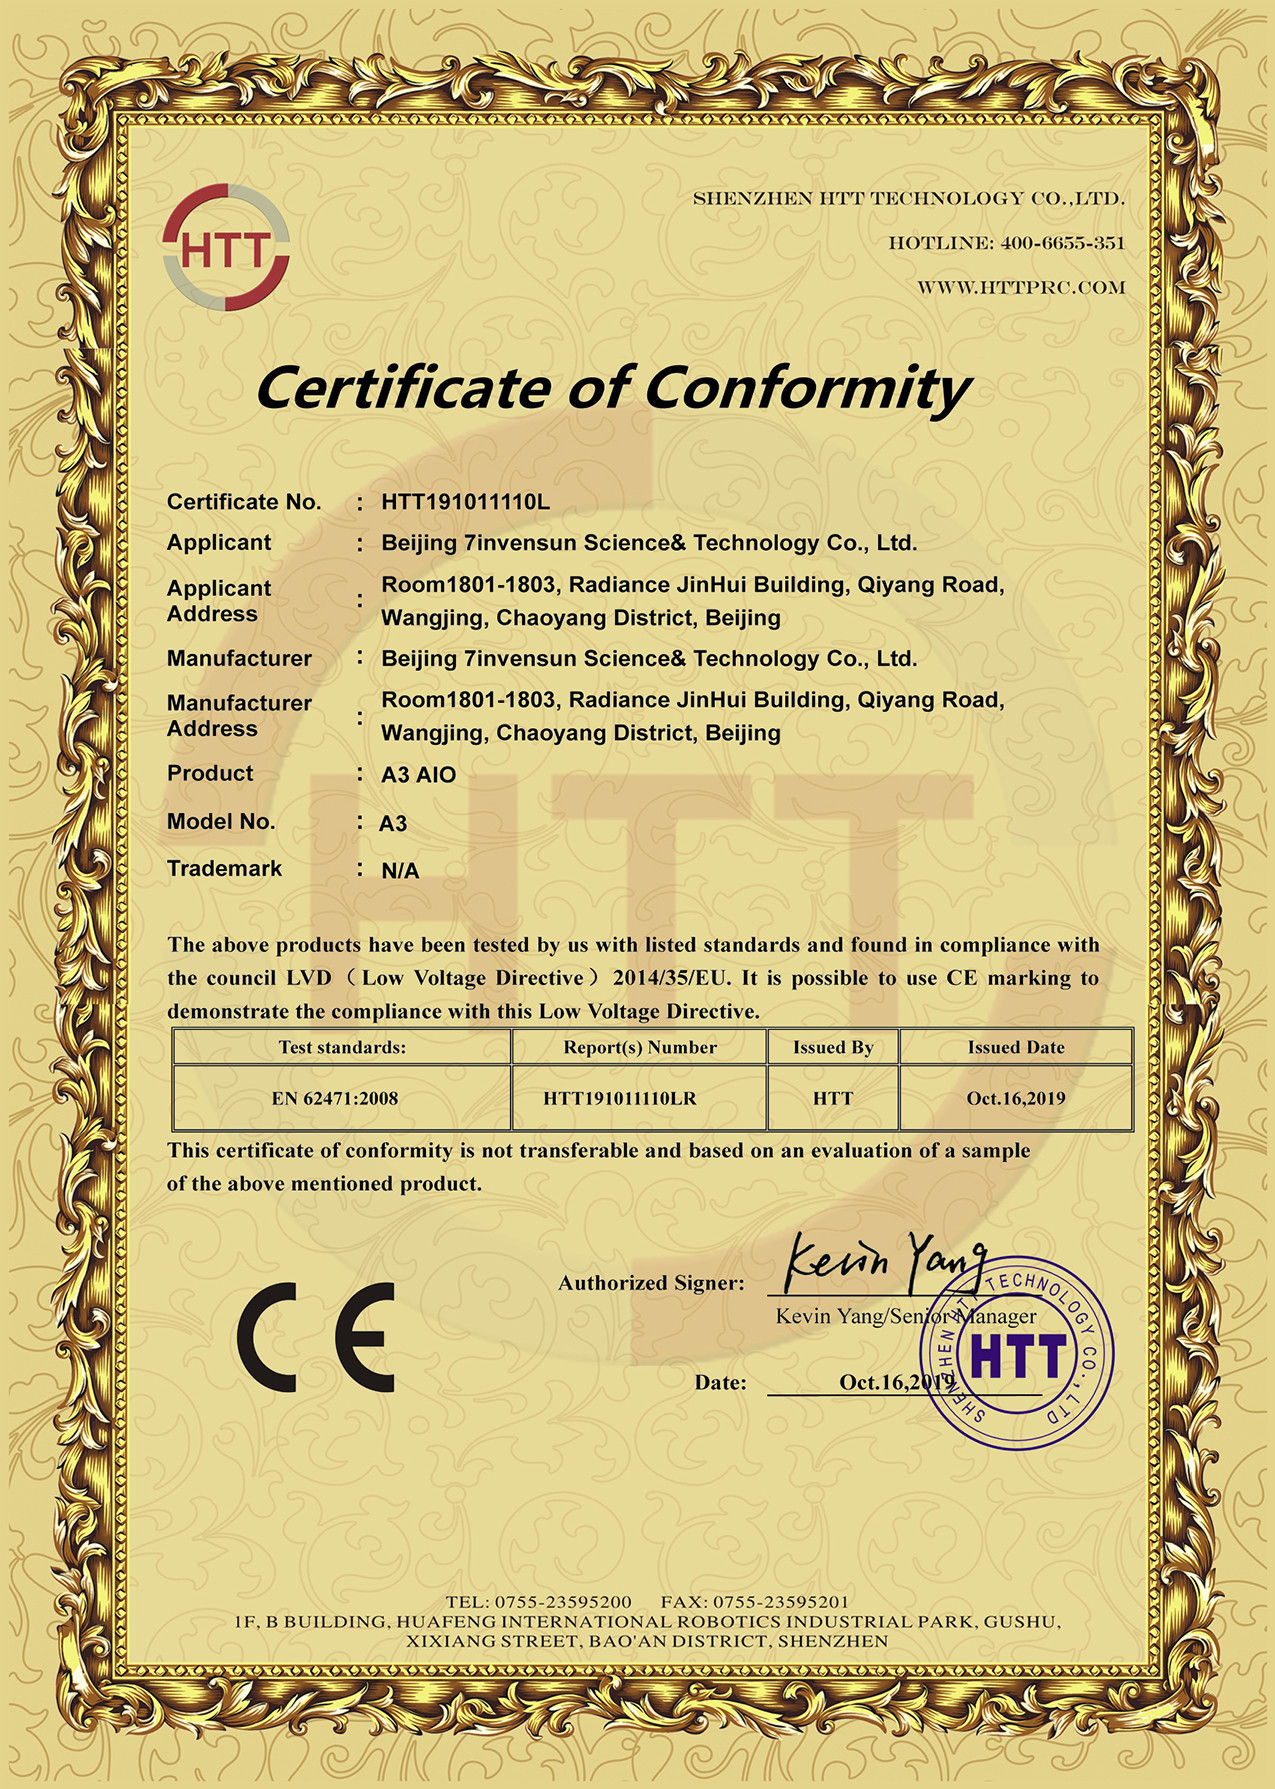 Beijing 7invensun Technology Co., Ltd. Certifications